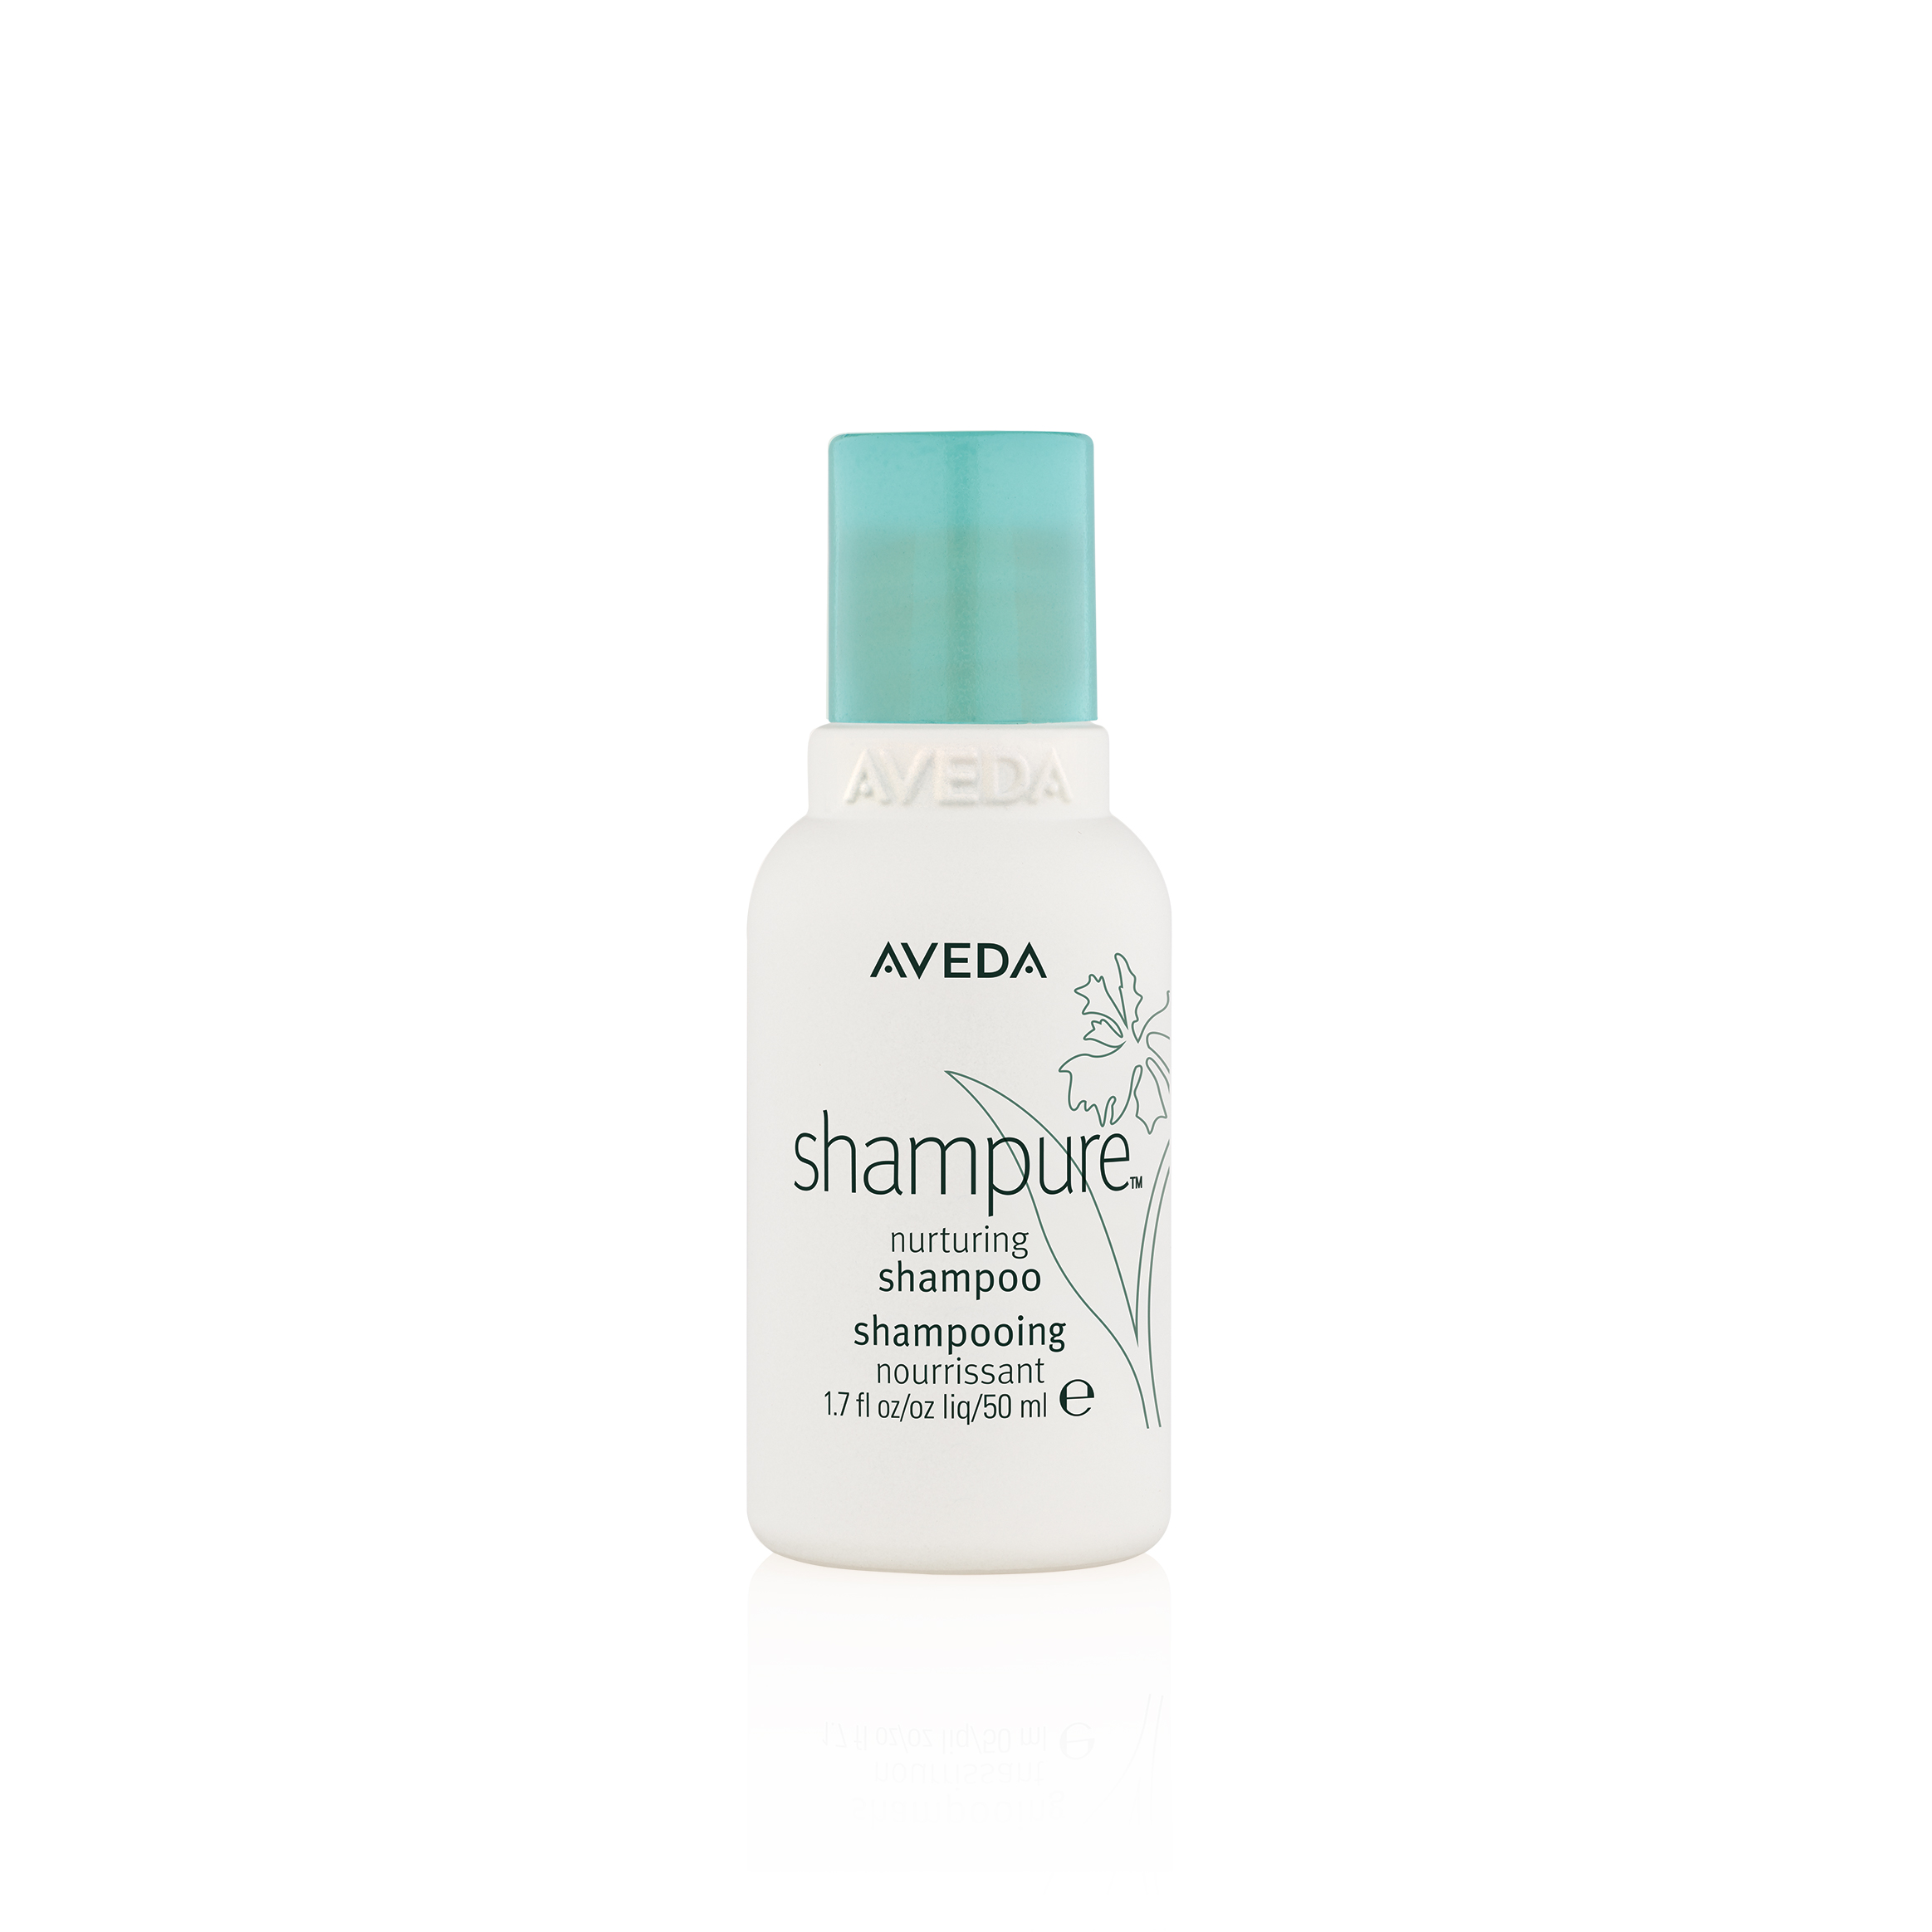 https://av-dashop.nl/wp-content/uploads/2020/11/Aveda-shampure-shampoo-50ml.jpg